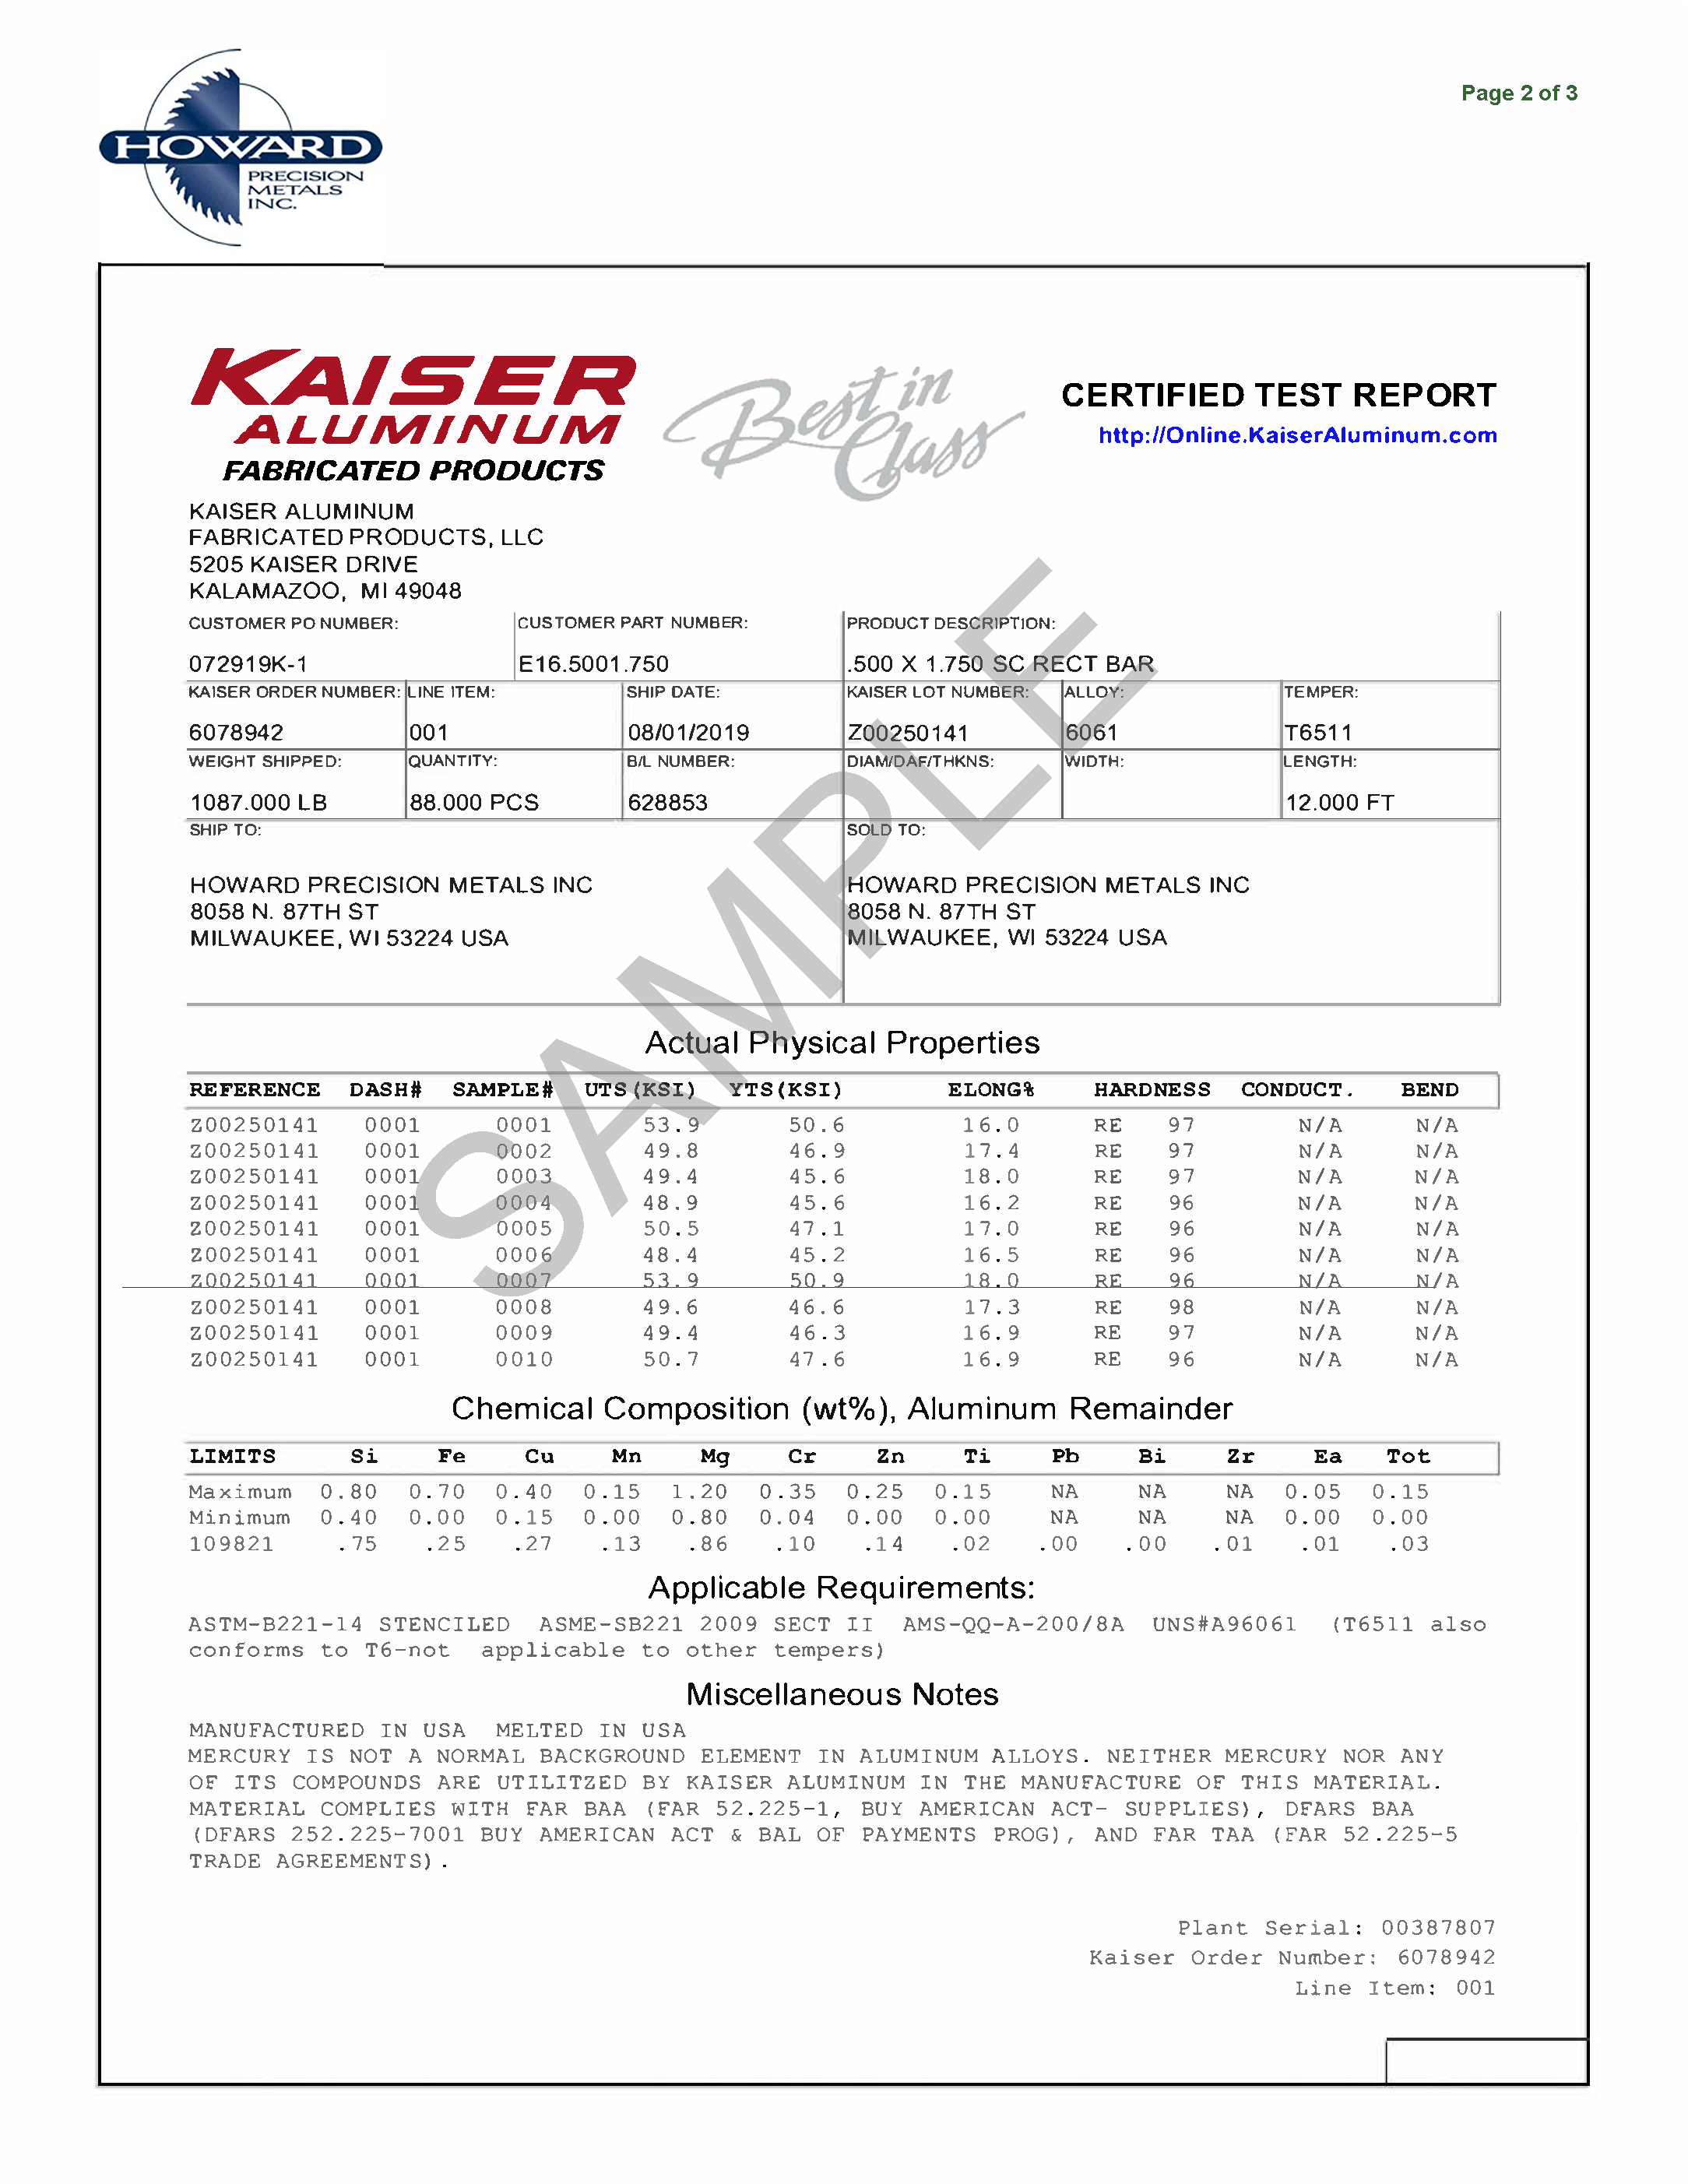 Sample Certificate for 6061 Aluminum Bar